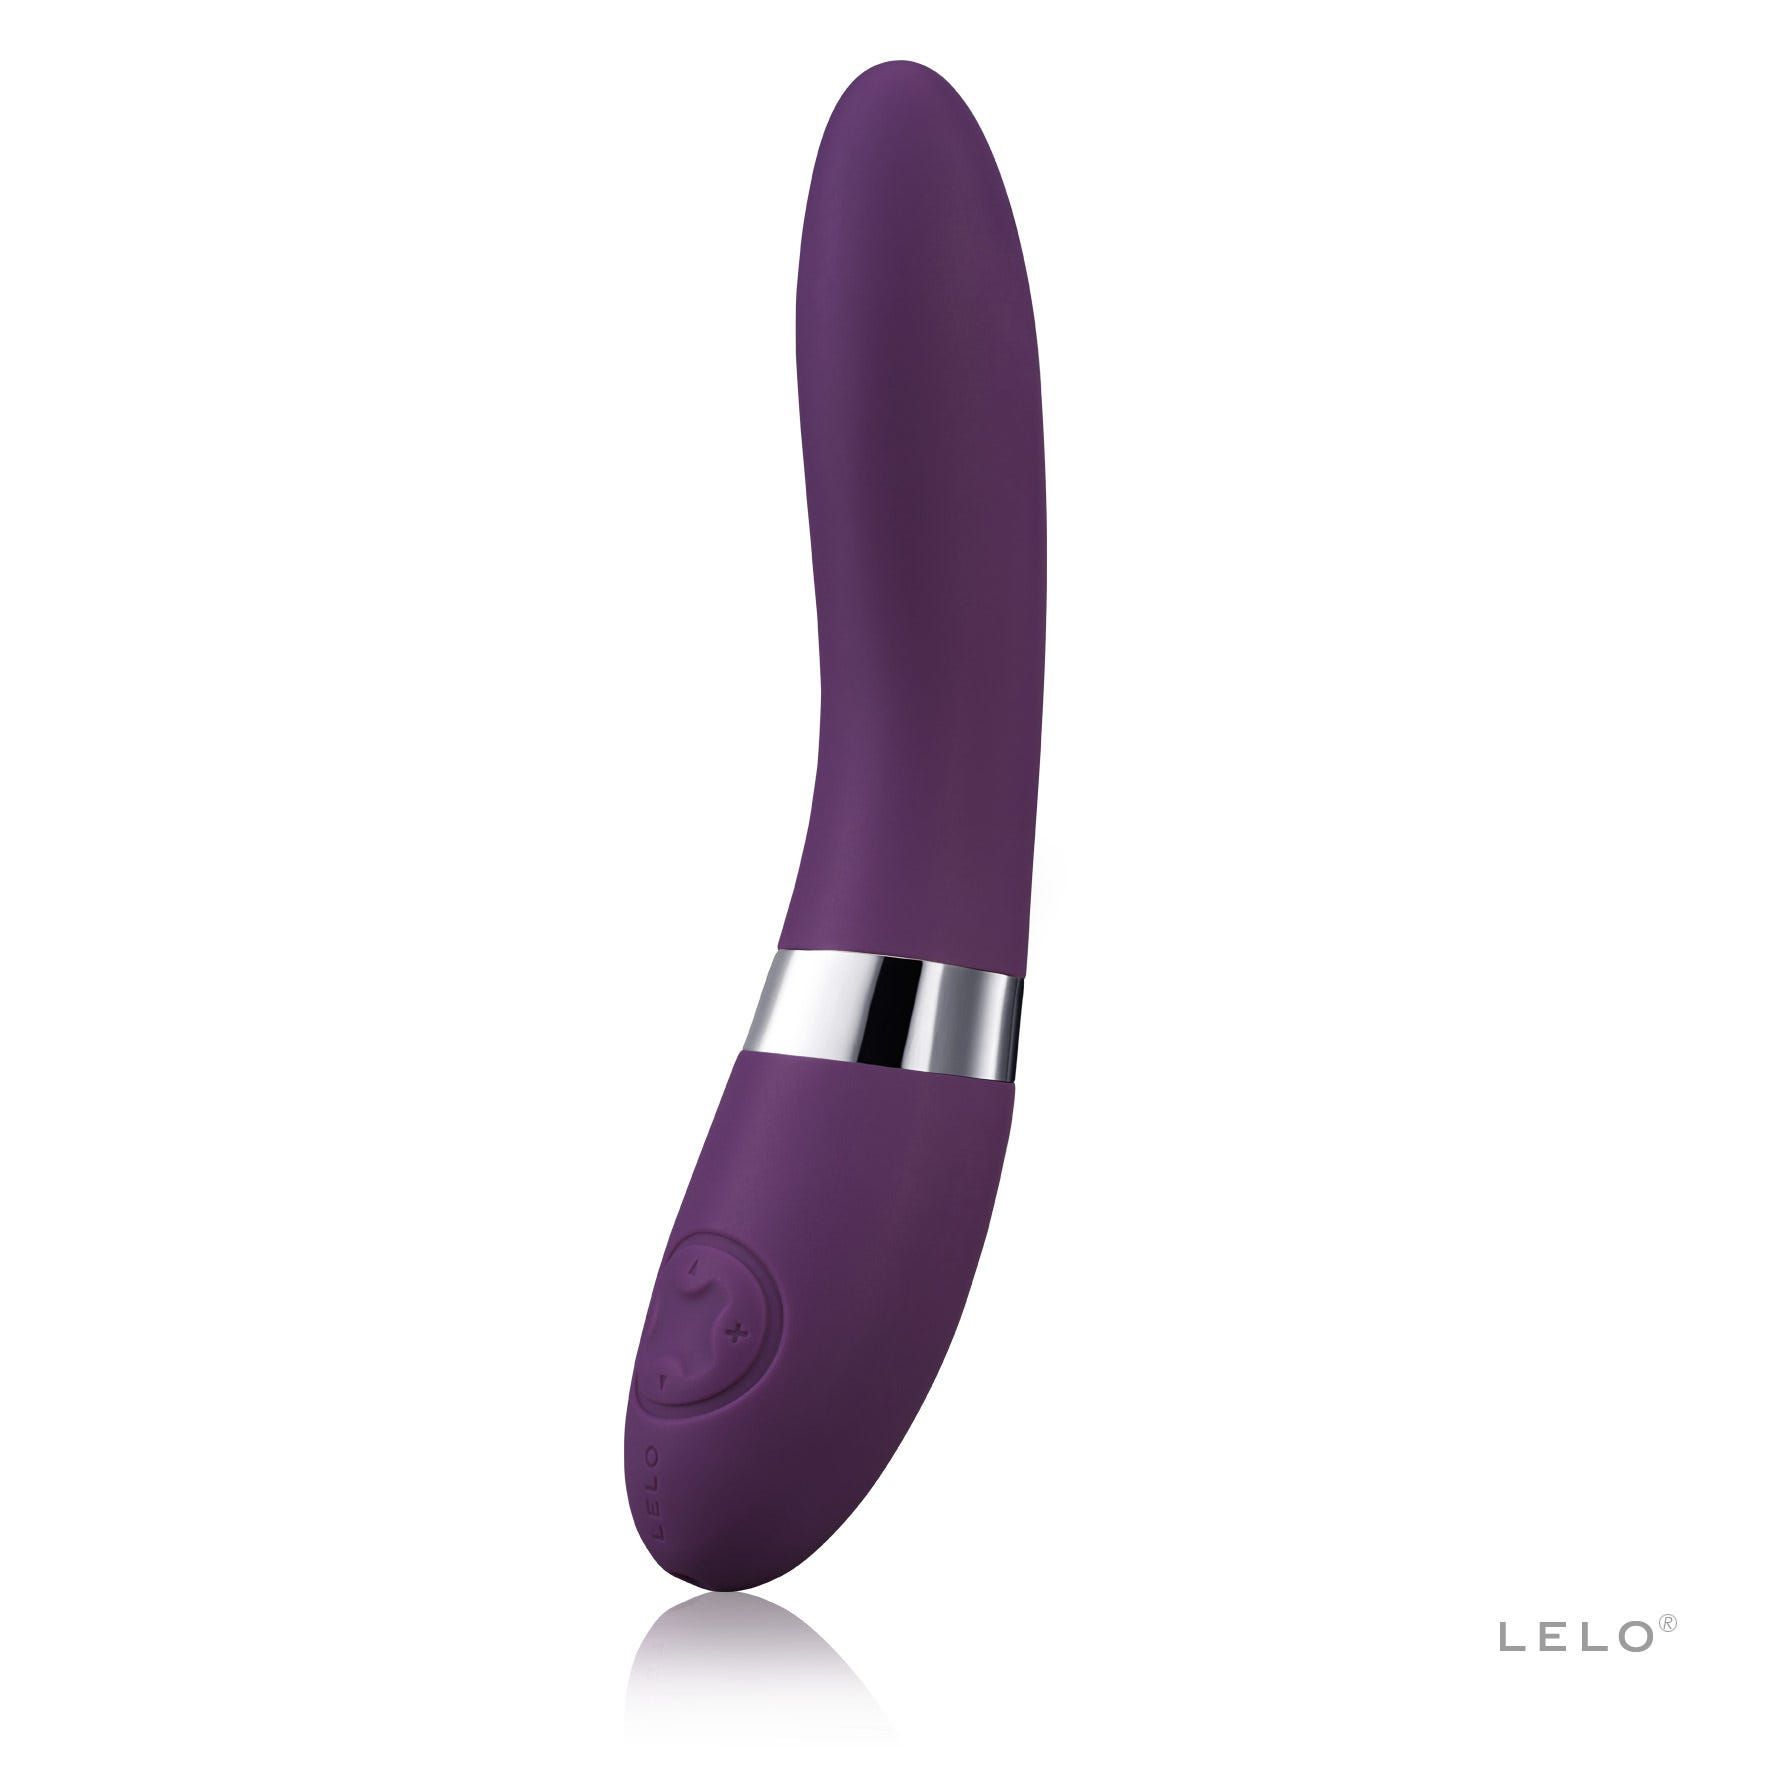 LELO – Elise 2 G-Spot Vibrator – Sweet Plum